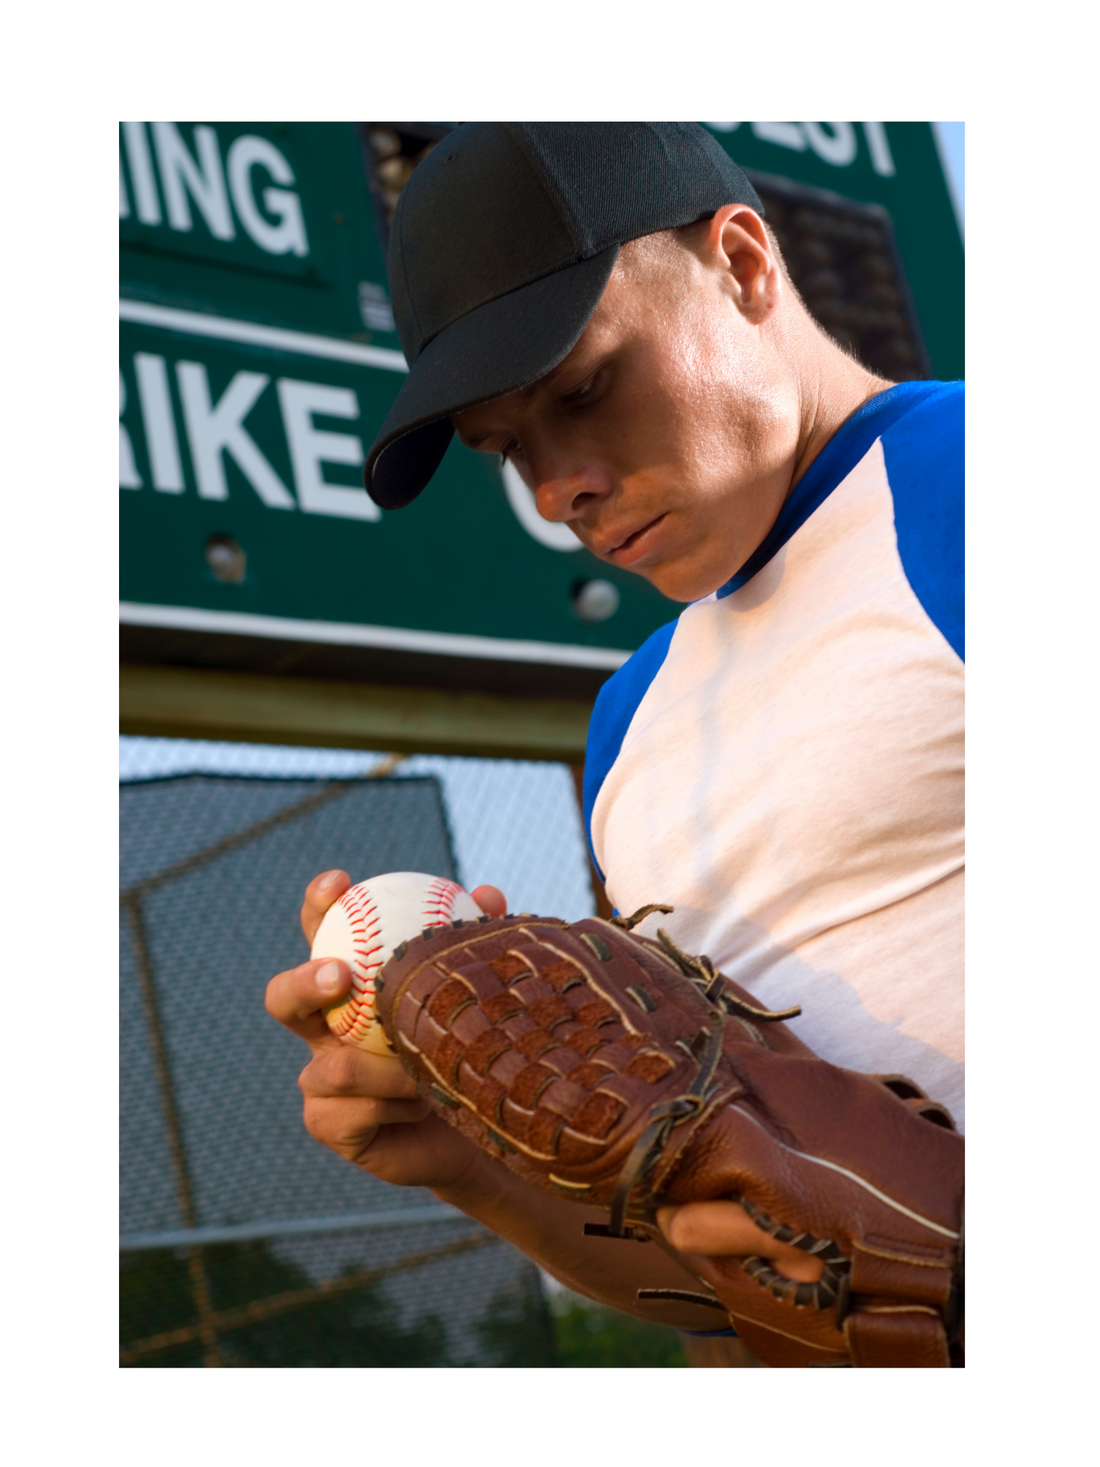 Baseball player holding a baseball and baseball glove in a baseball uniform at a baseball field